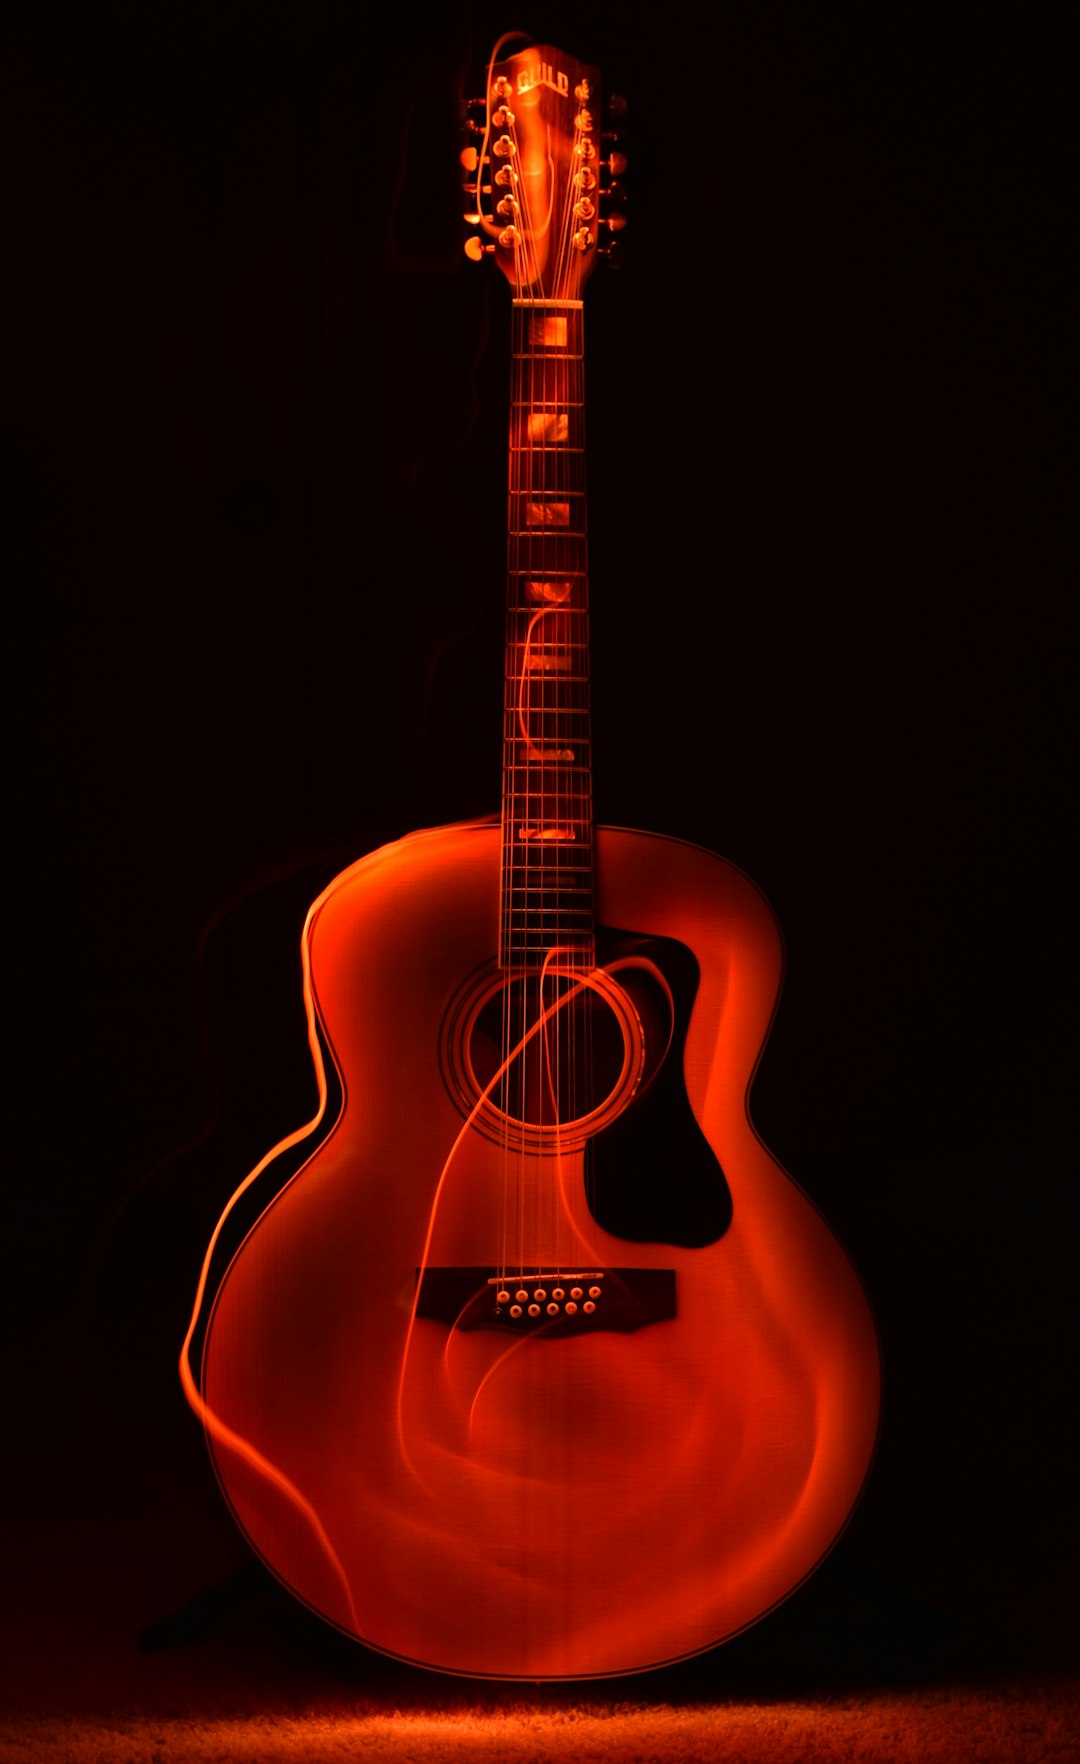 Best 500 Guitar Images HQ Download Free Pictures on Unsplash